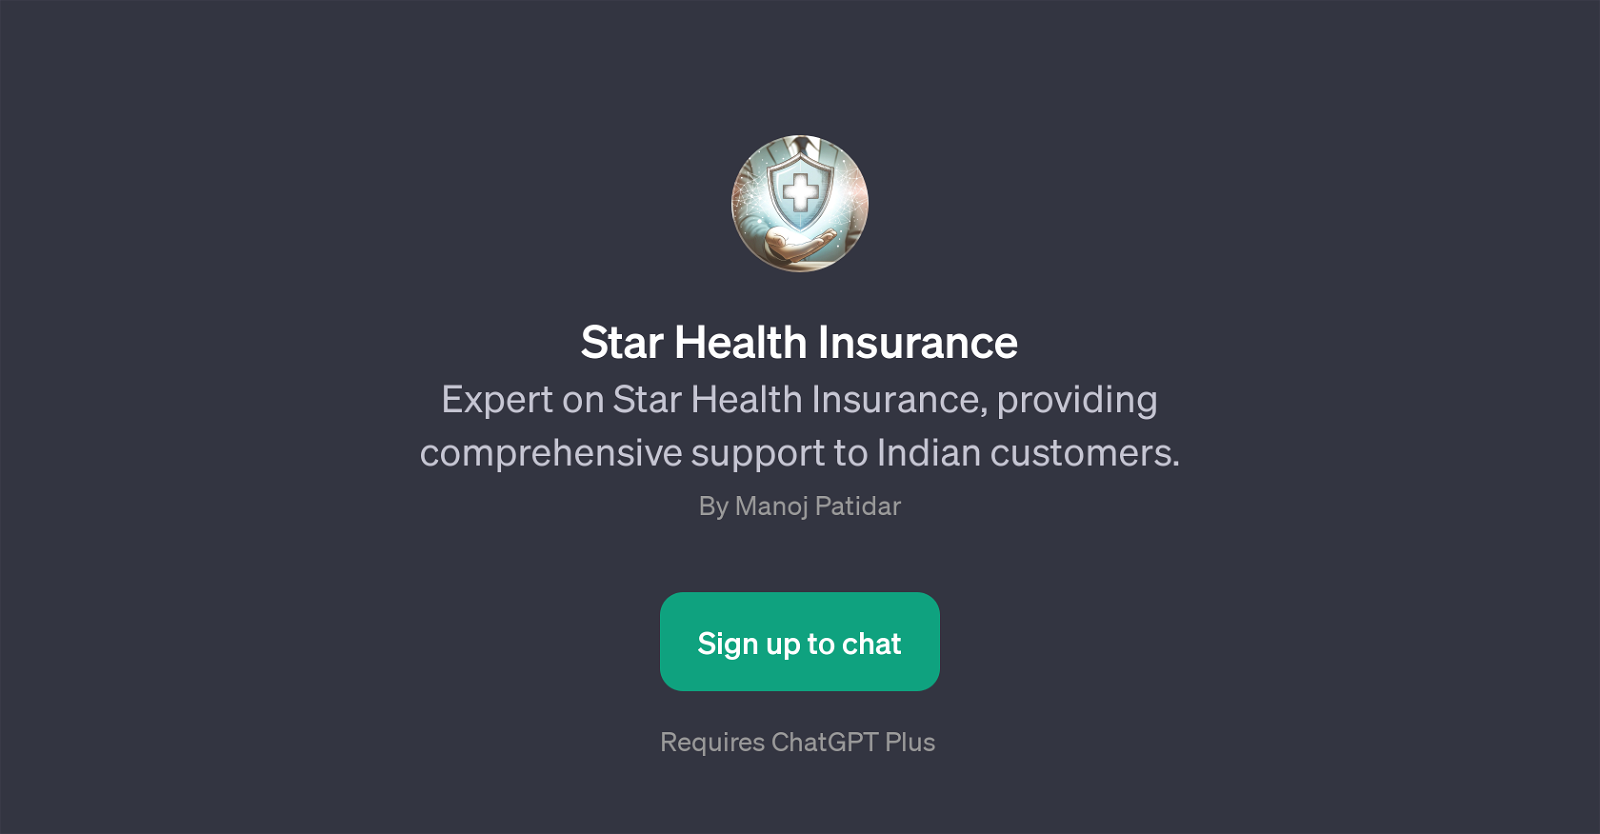 Star Health Insurance website